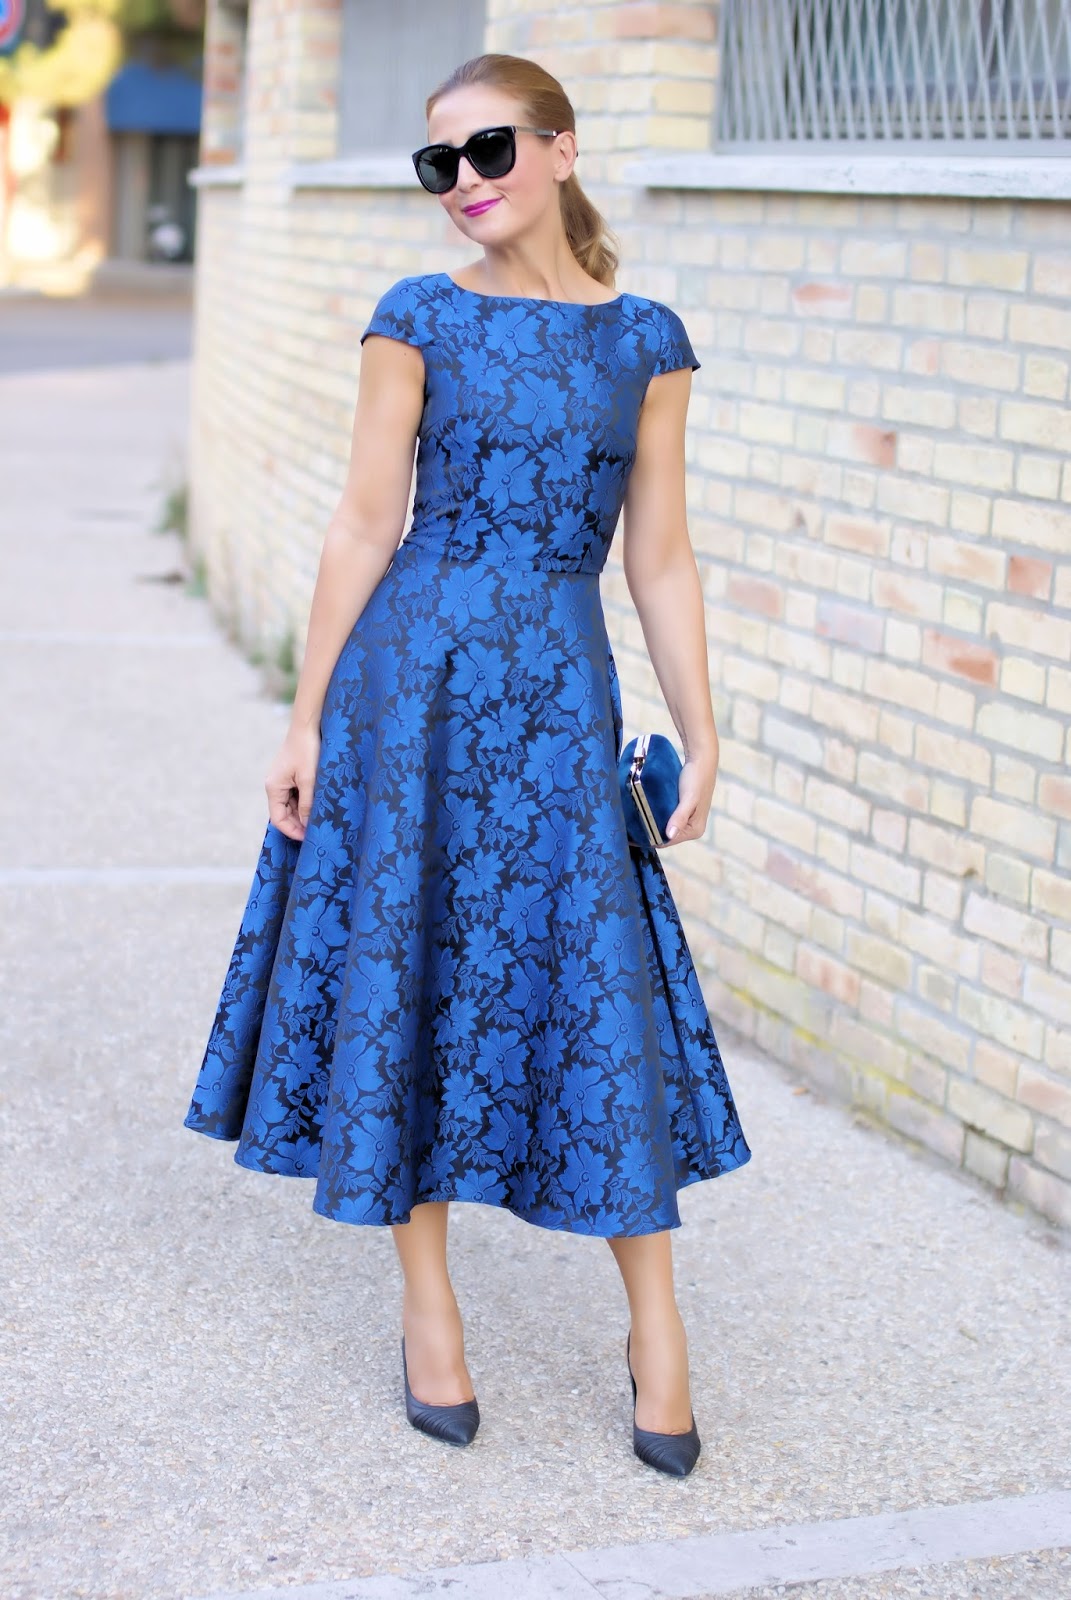 Blue elegant jacquard midi dress from Metisu on Fashion and Cookies fashion blog, fashion blogger style